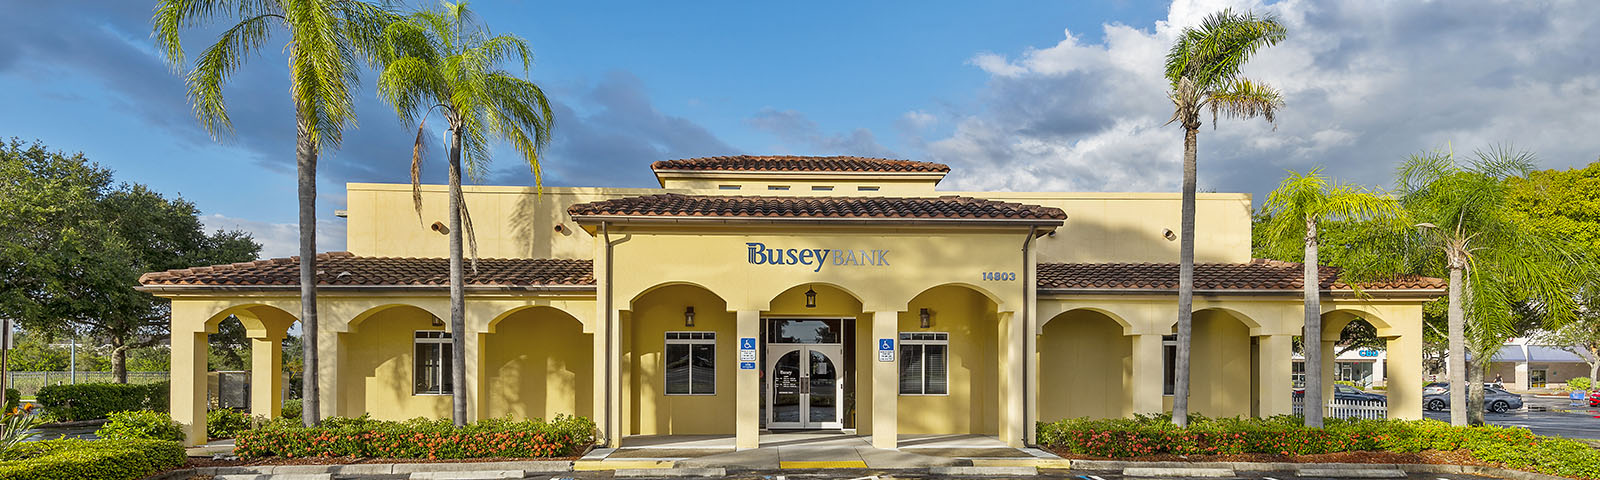 Busey Bank North Port location